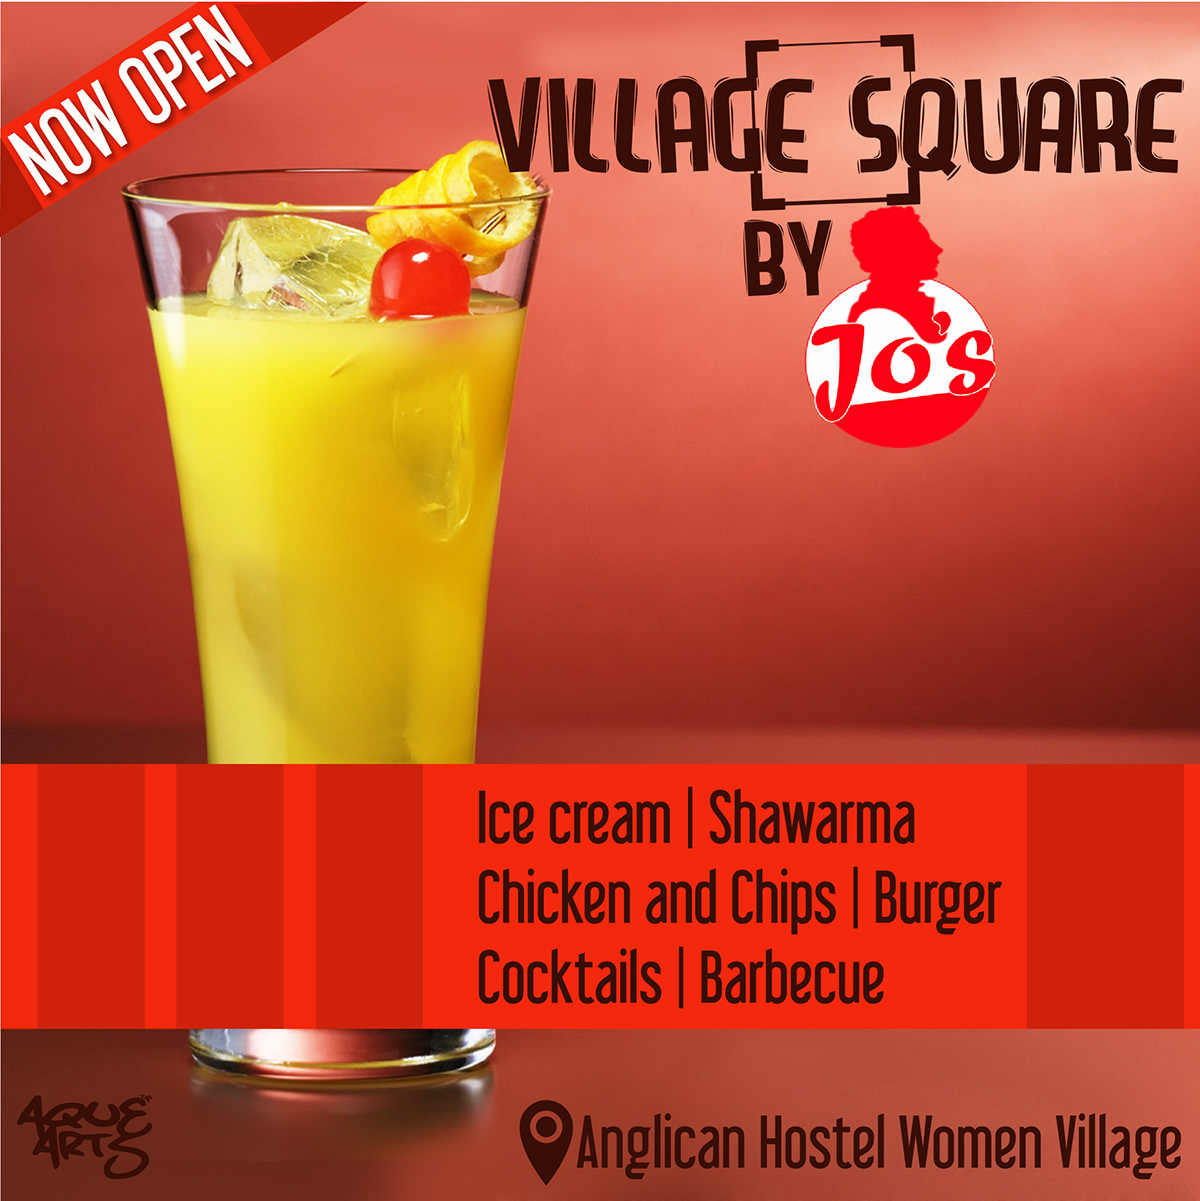 jo's village square aquearts burger Chicken n Chips shawarma cocktail ice cream